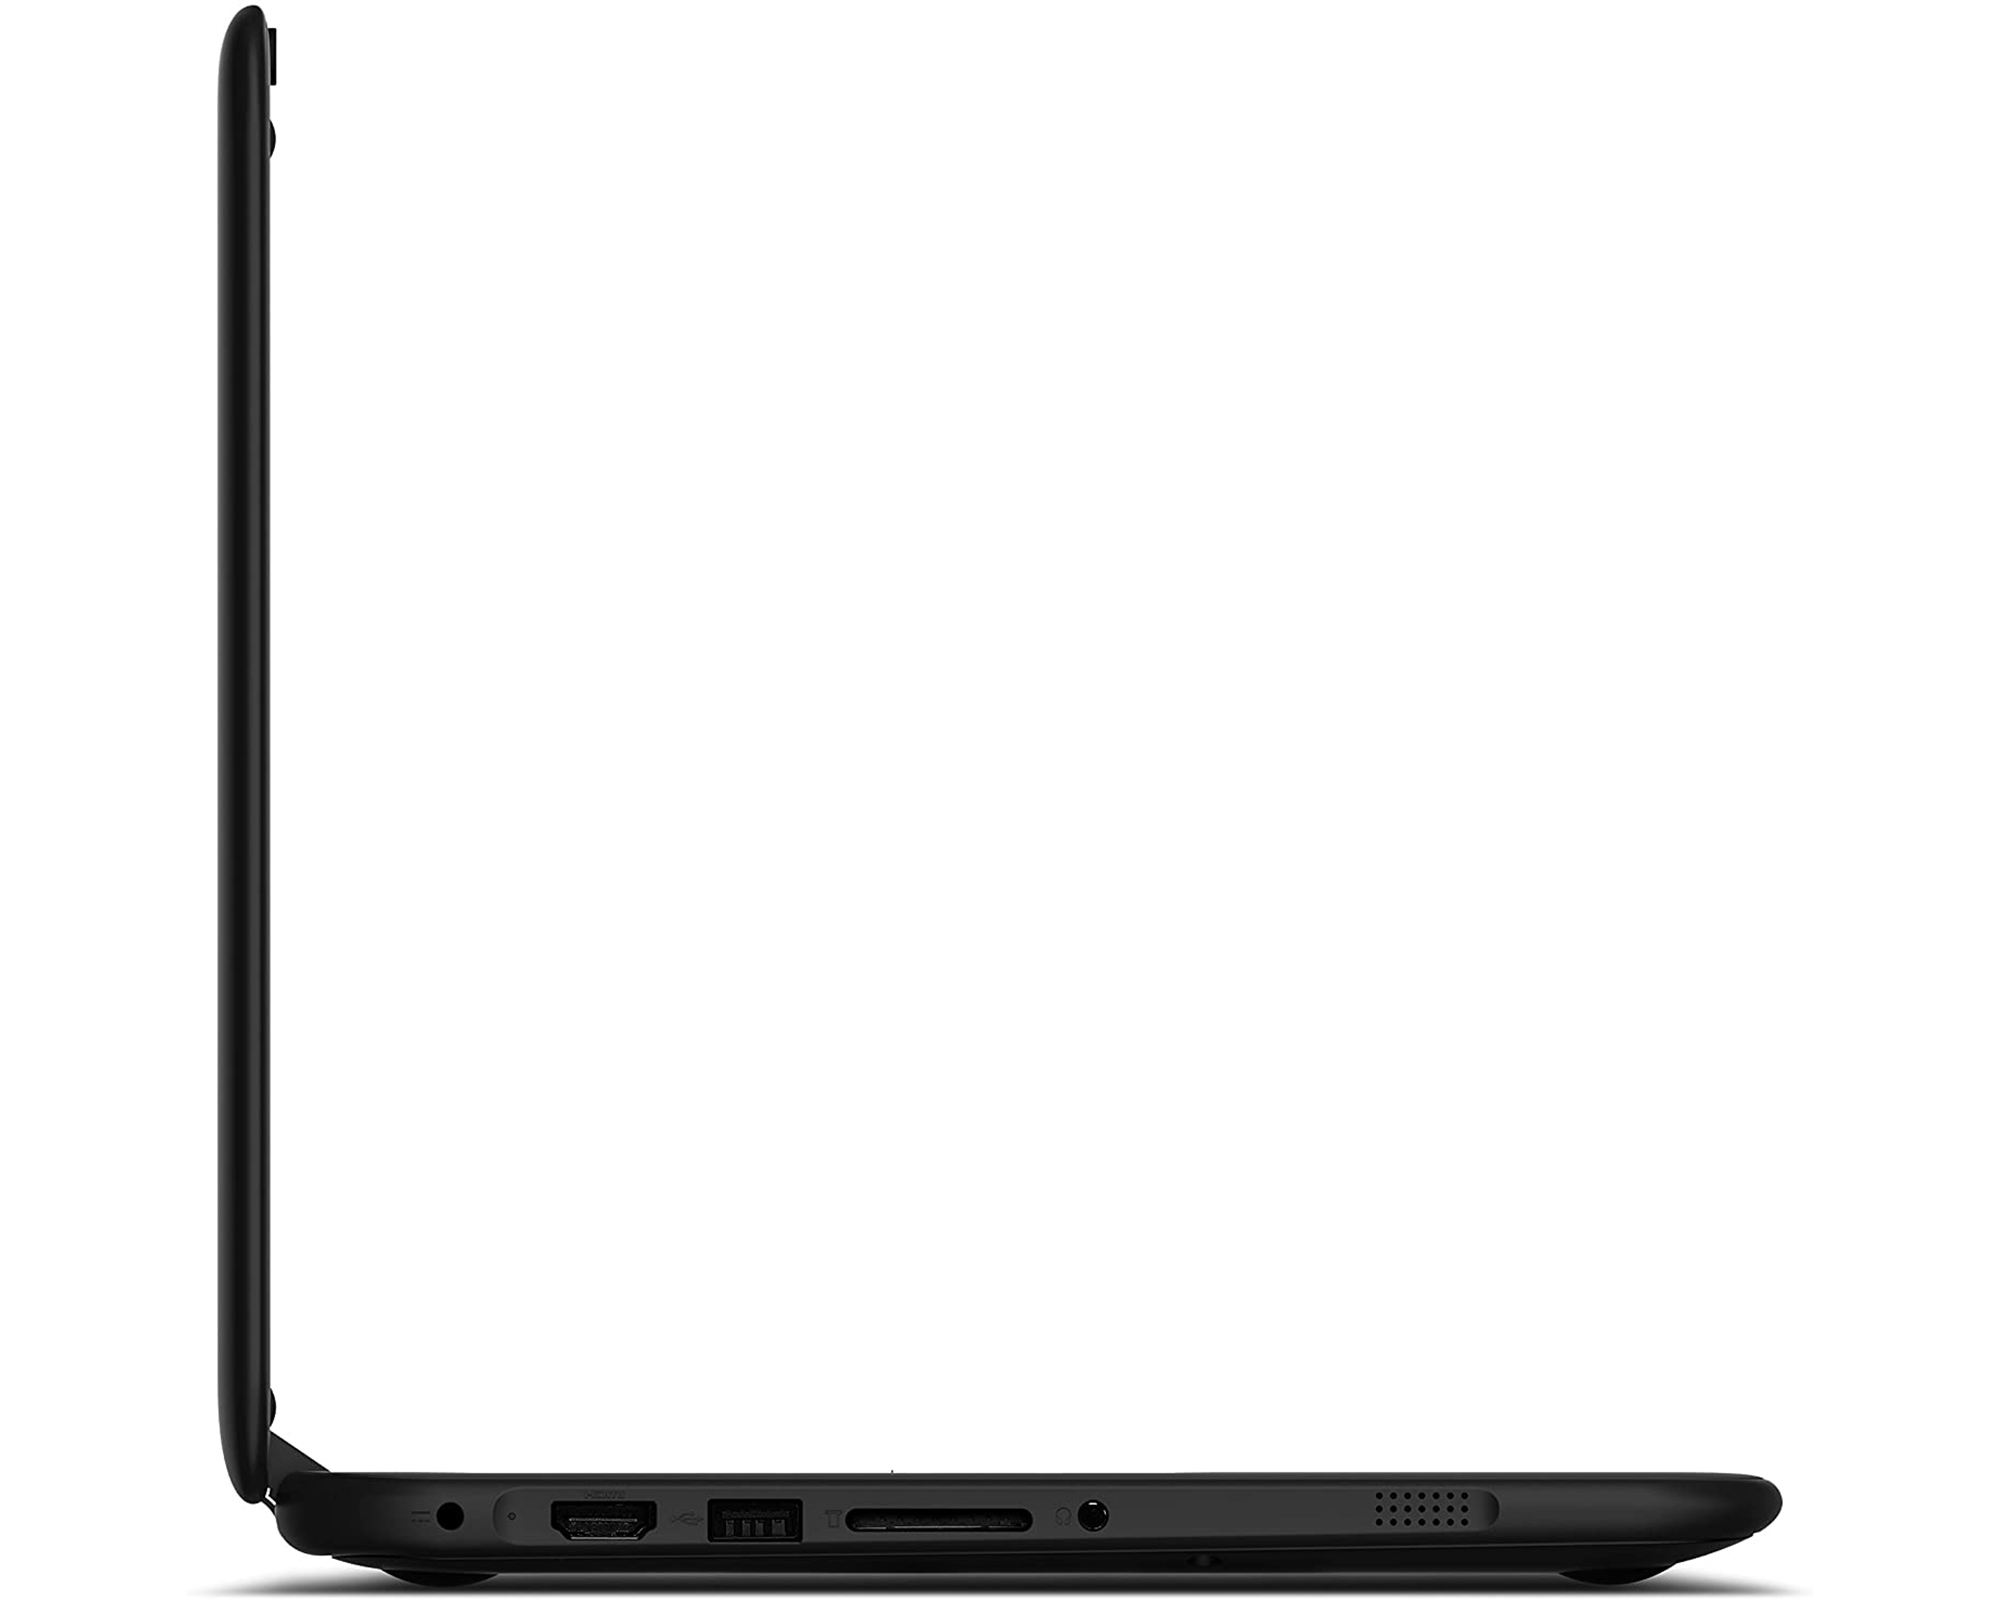 Used Lenovo N22 Series Chromebook 11.6-Inch (2GB RAM, 16GB HDD, Intel Celeron 1.60GHz) - image 9 of 10